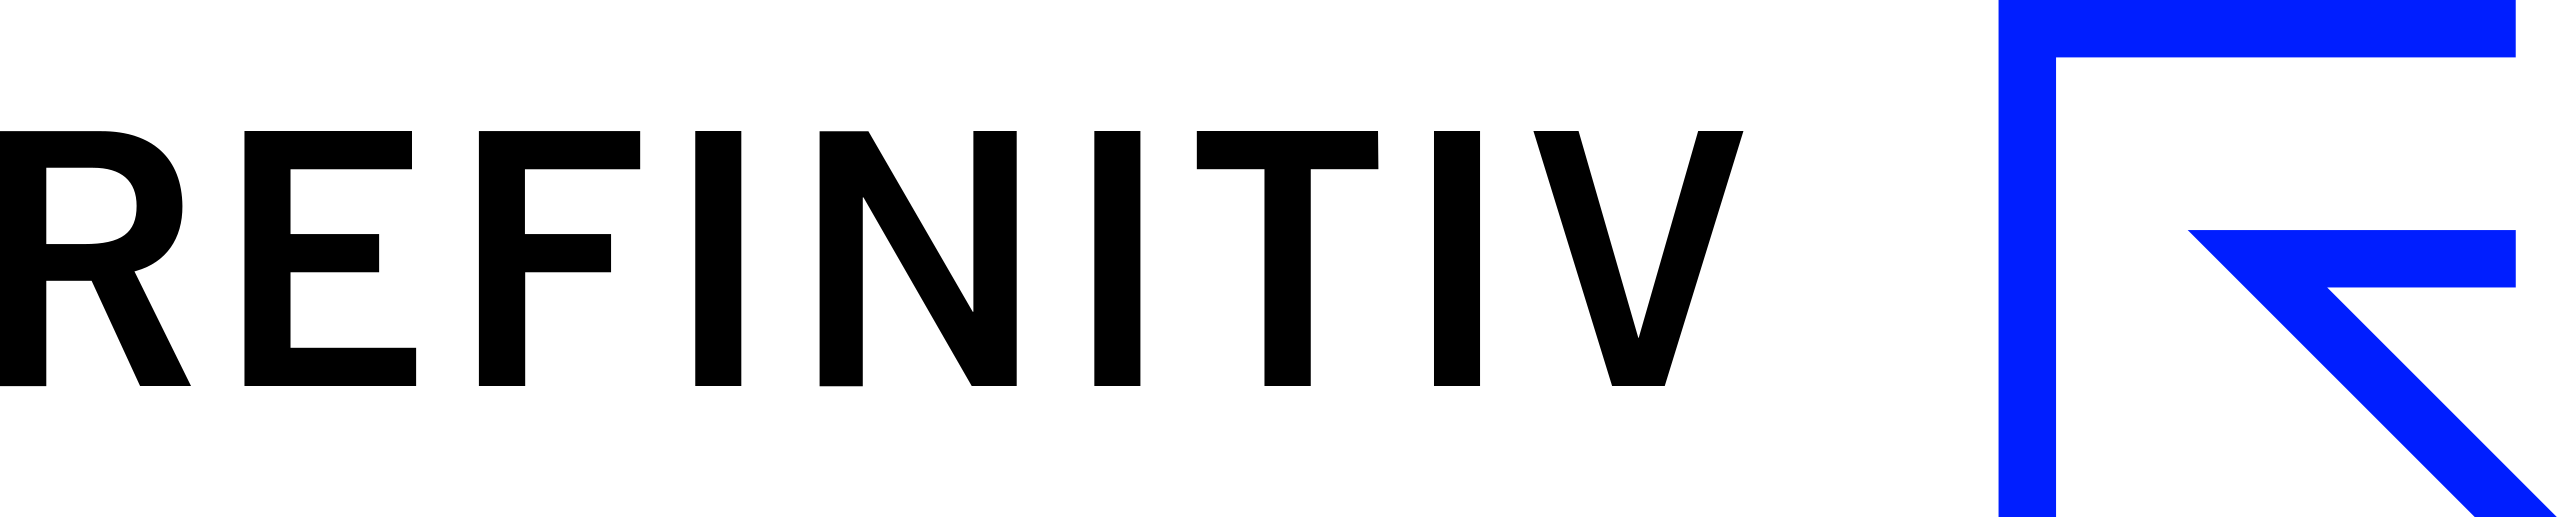 Refintiv Logo